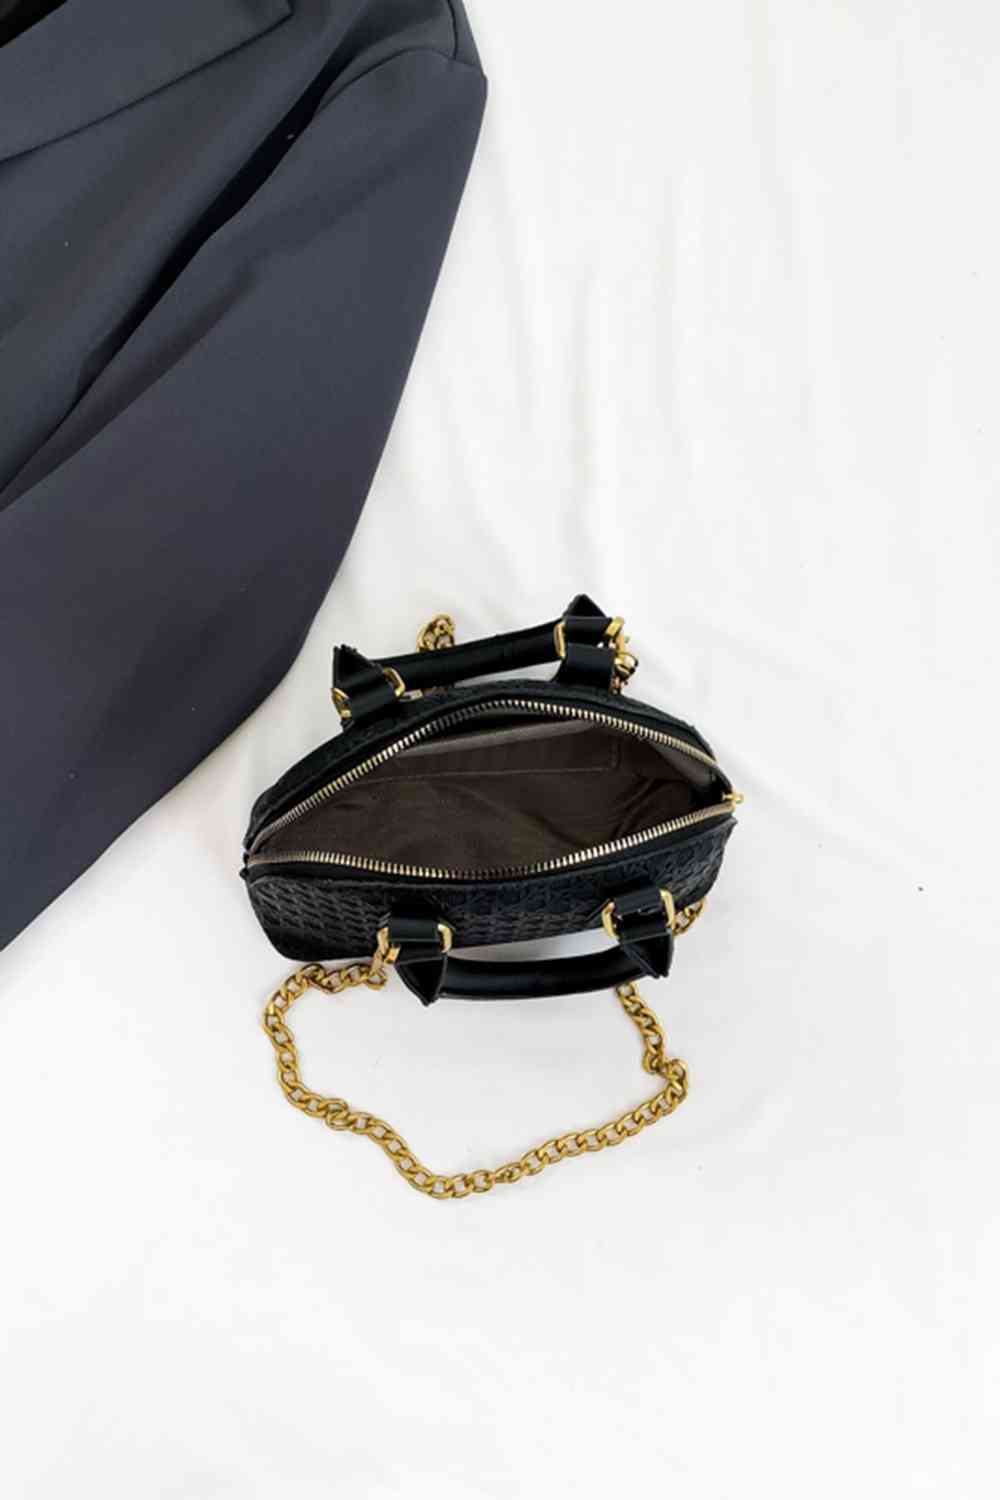 TEEK - Pop Colored PU Leather Crossbody Bag BAG TEEK Trend   